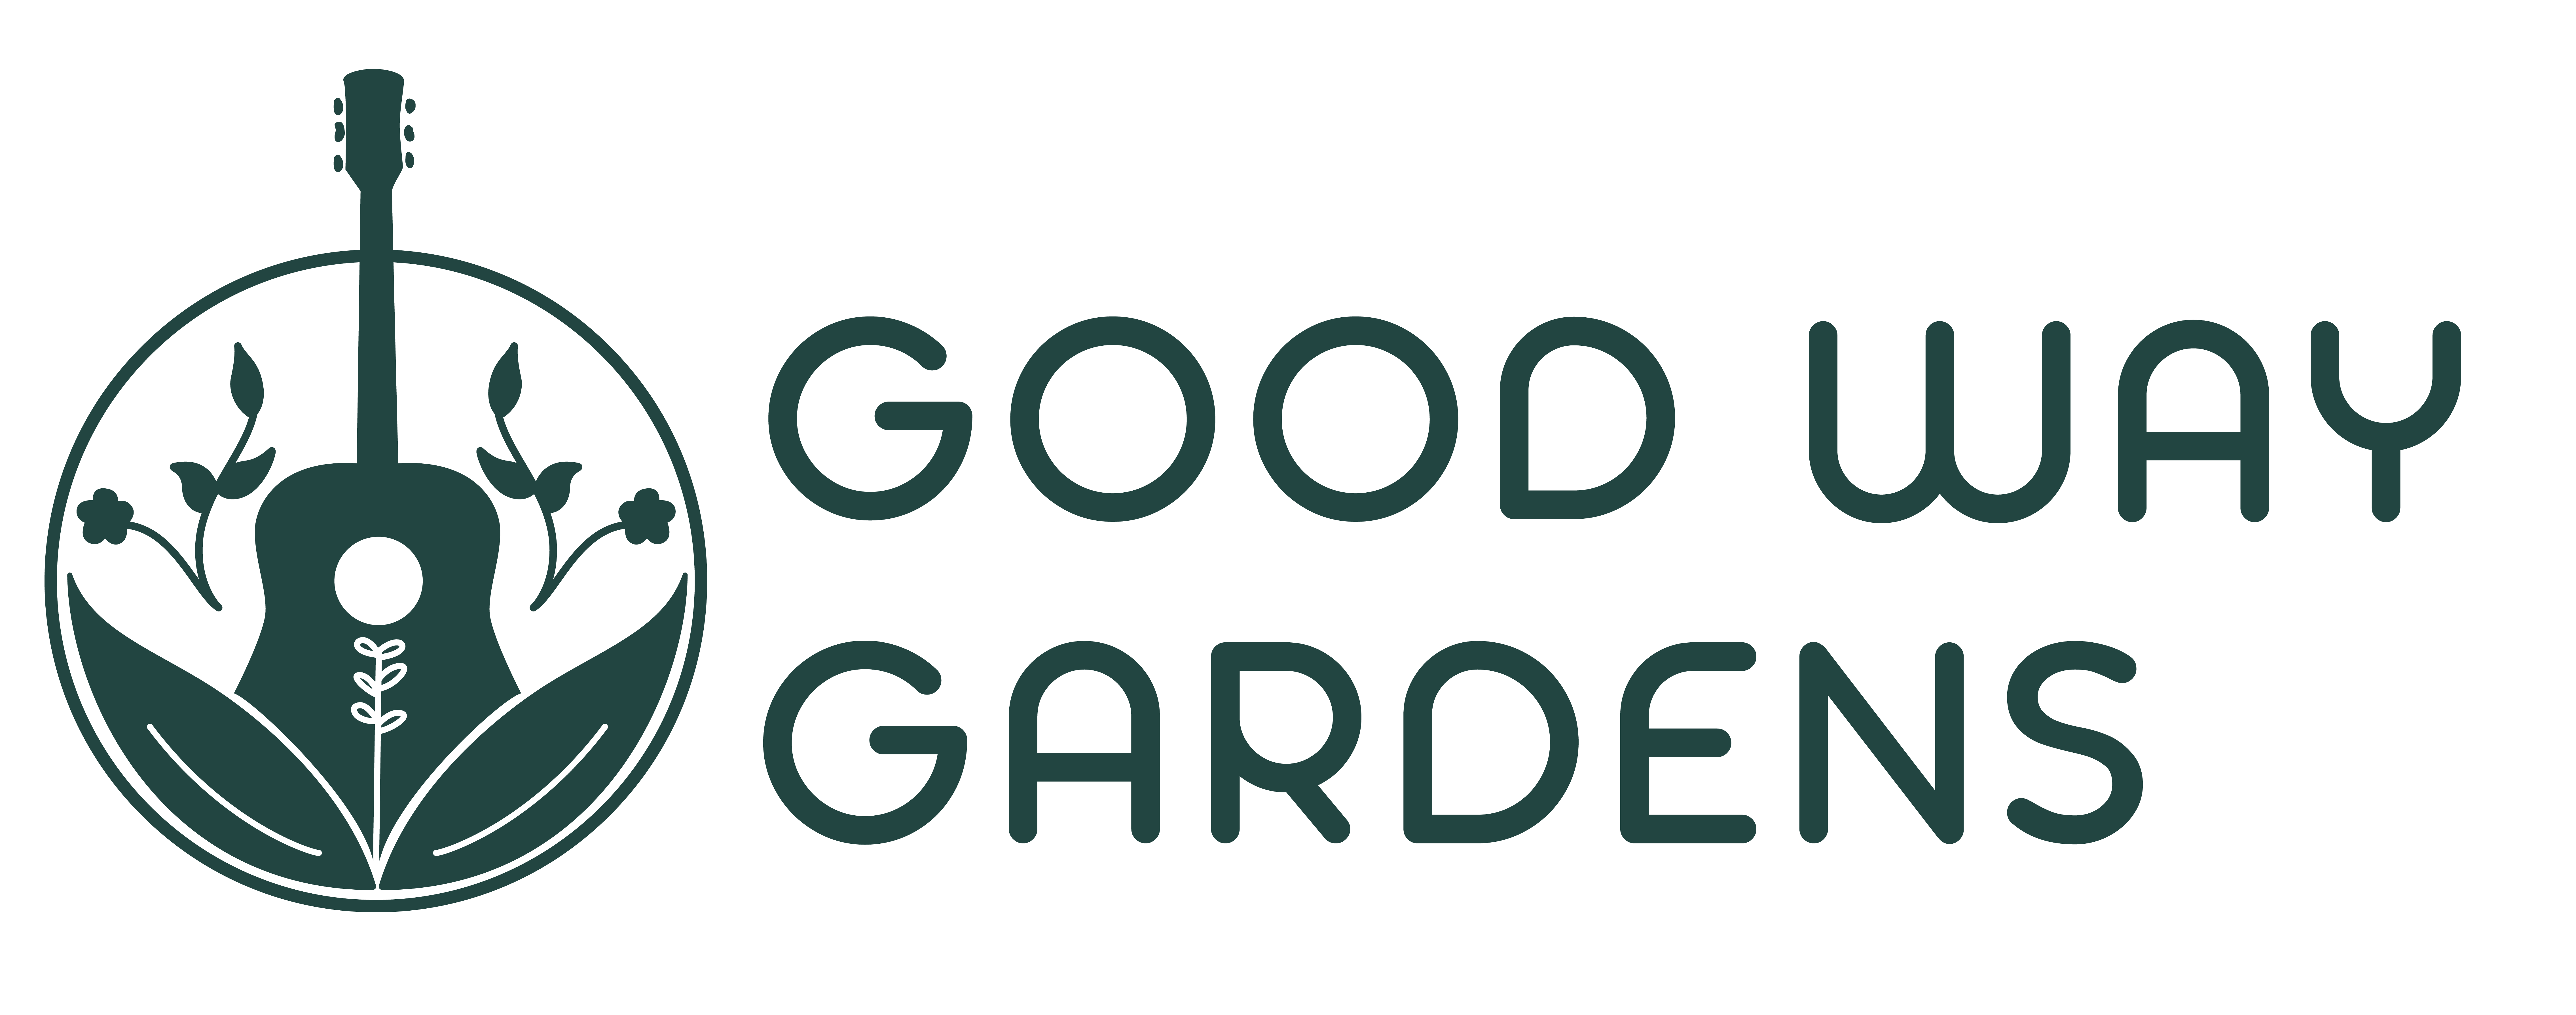 Good Way Gardens Logo - Clean Simple Lines -_Horizontal Logo-3